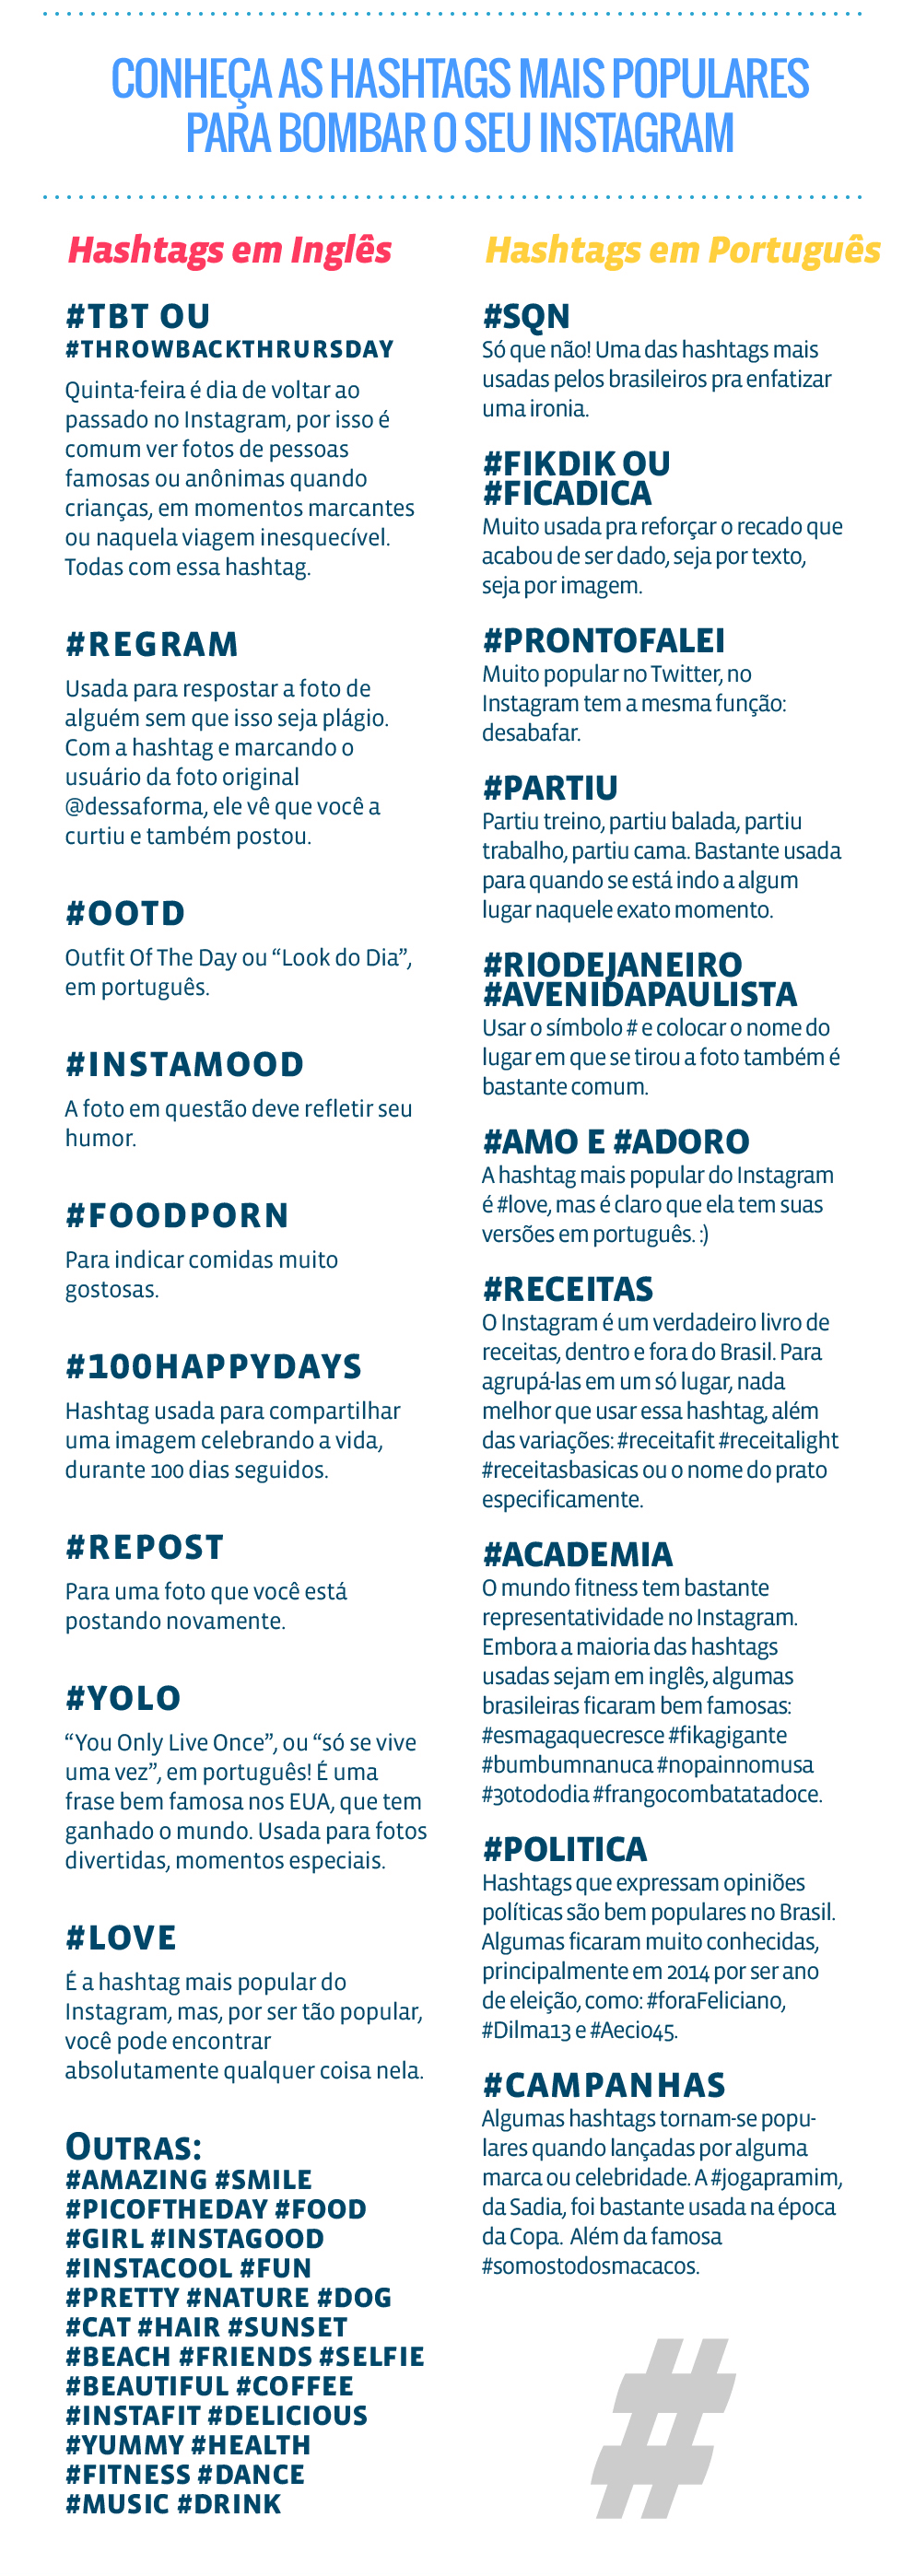 instagram-marketing-hashtags-populares